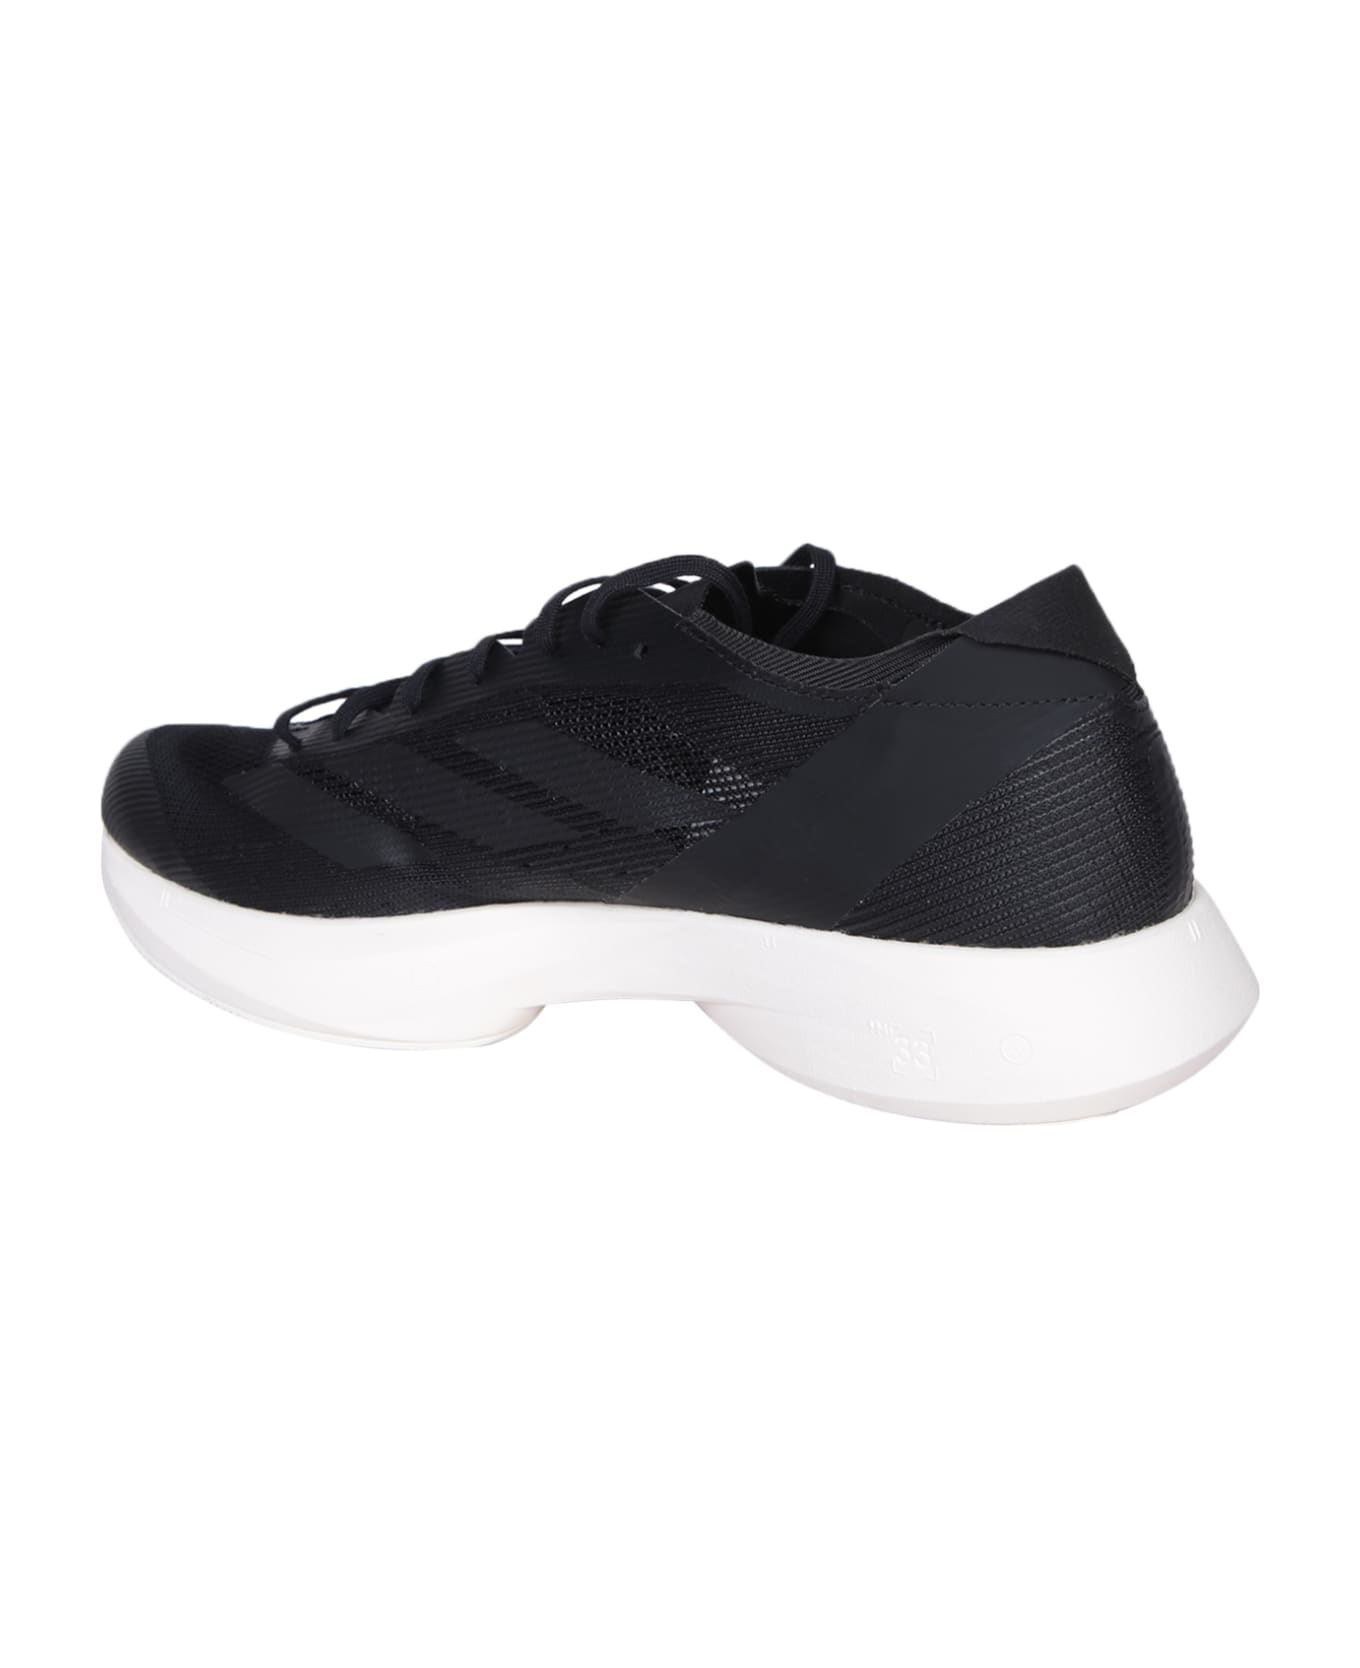 Y-3 Black Fabric Sneakers - Black Off White スニーカー